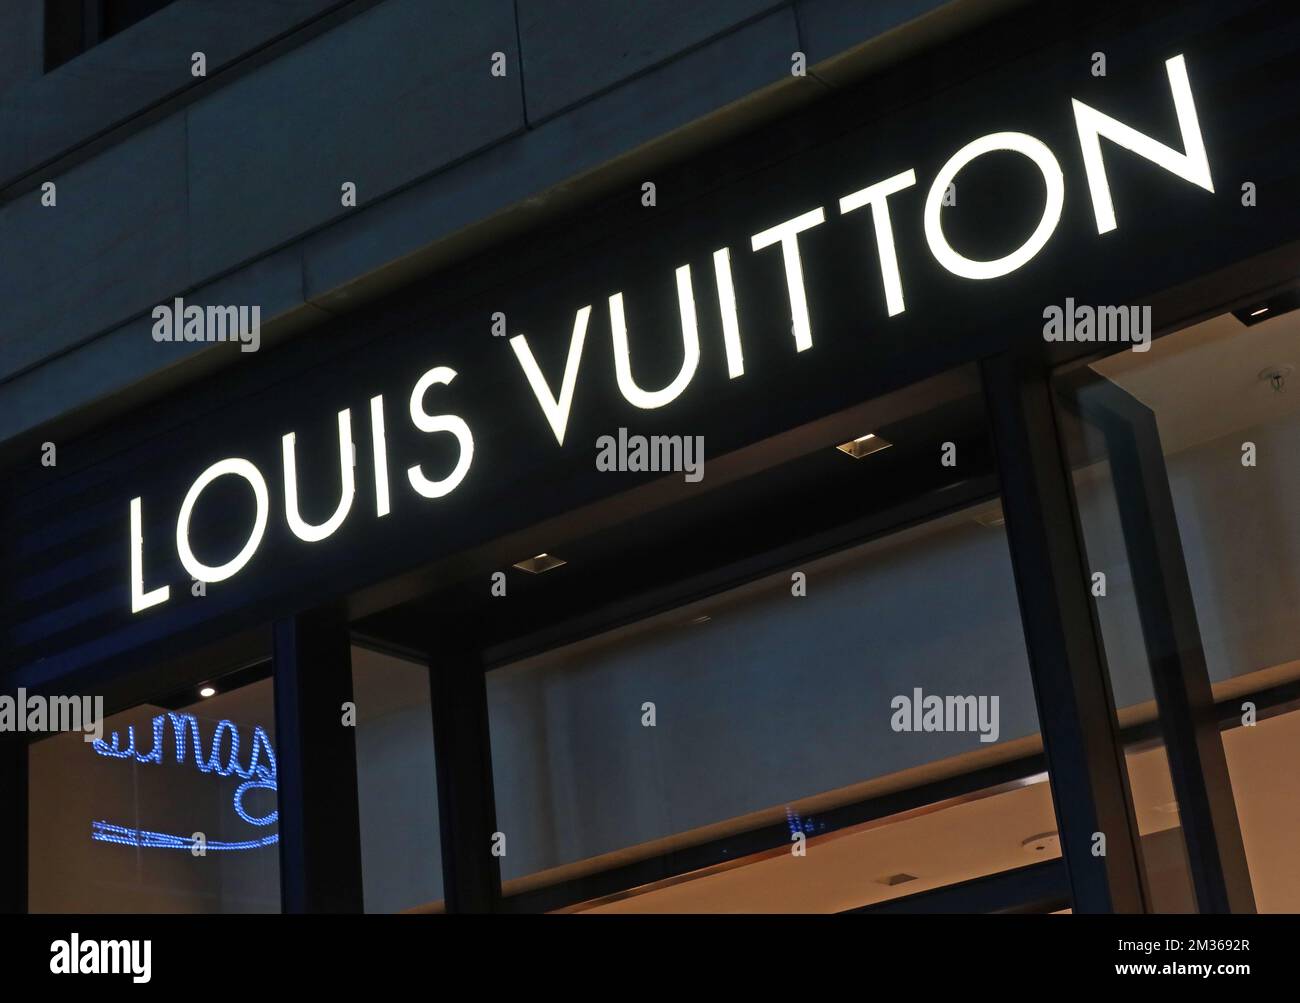 Louis Vuitton store, Birmingham, UK Stock Photo - Alamy